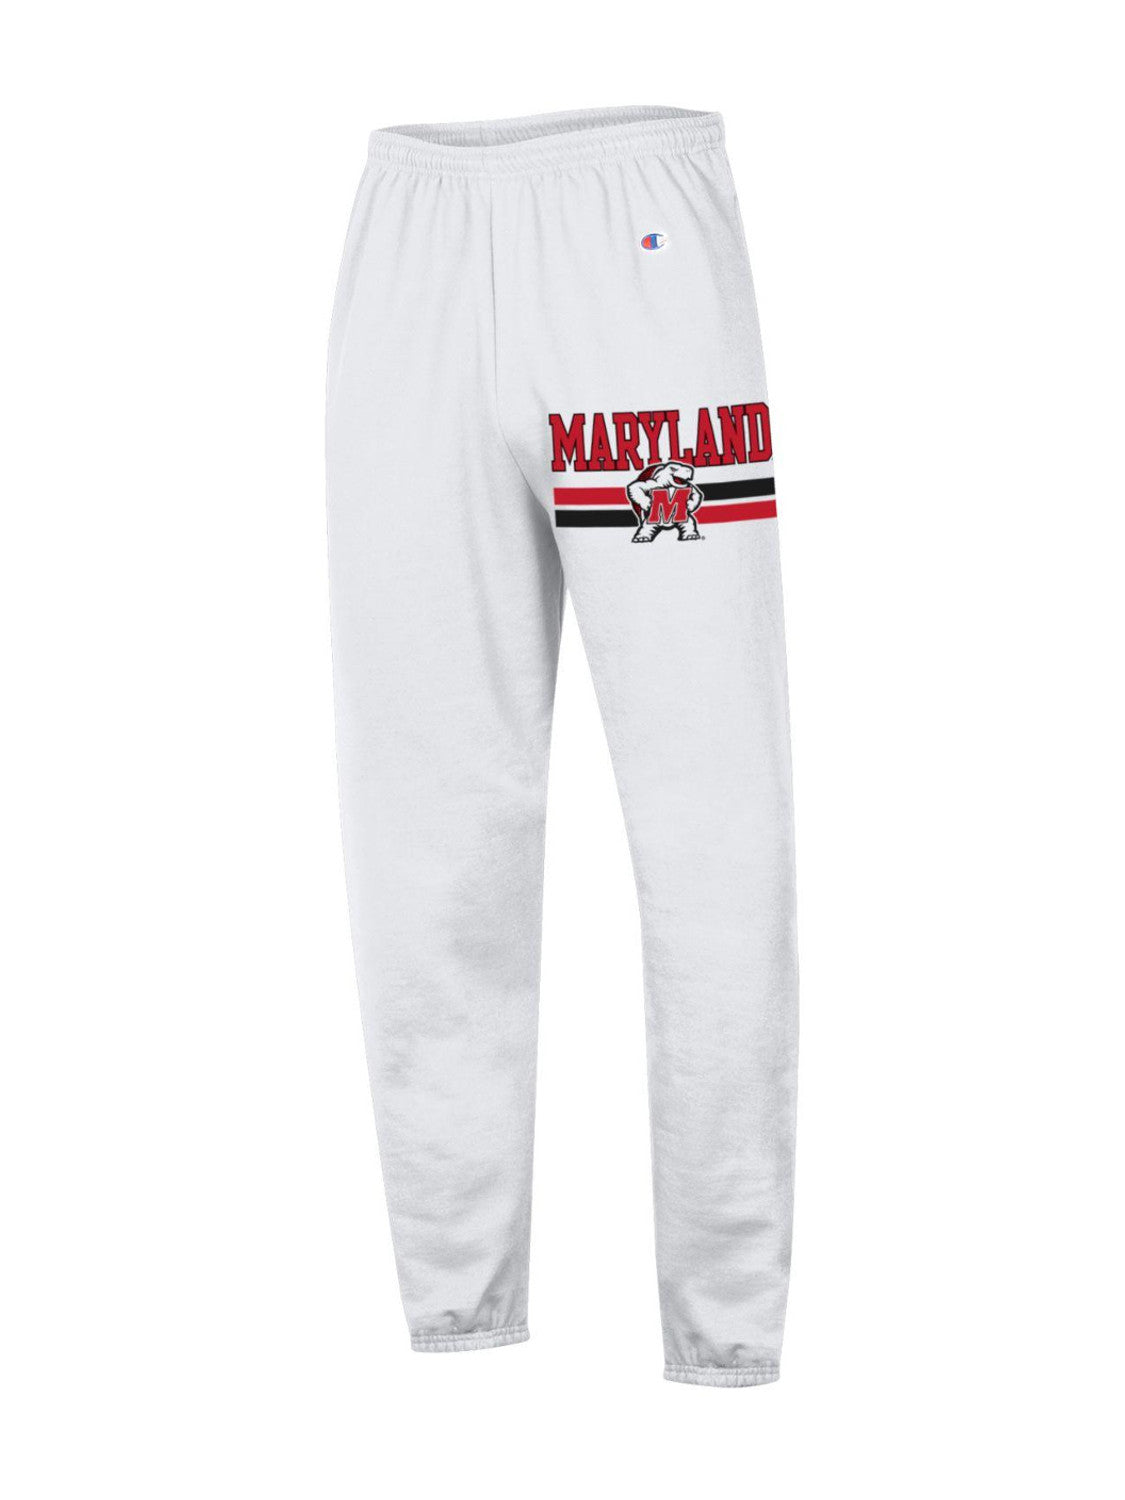 Champion University of Maryland Sweatpants (White)